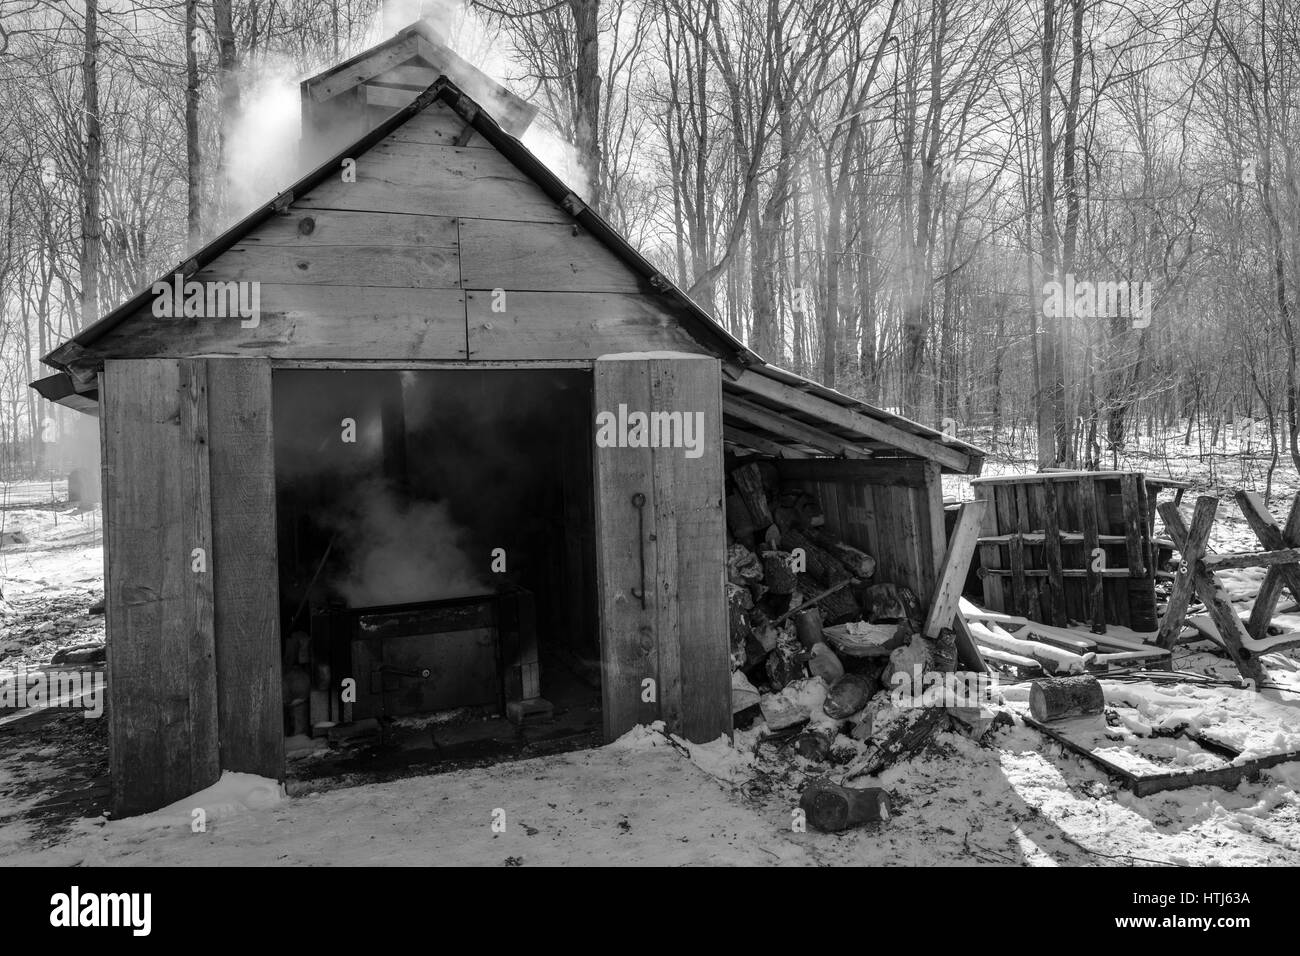 Old fashioned sugar shack in a maple syrup farm / sugar bush in London, Ontario, Canada. Stock Photo